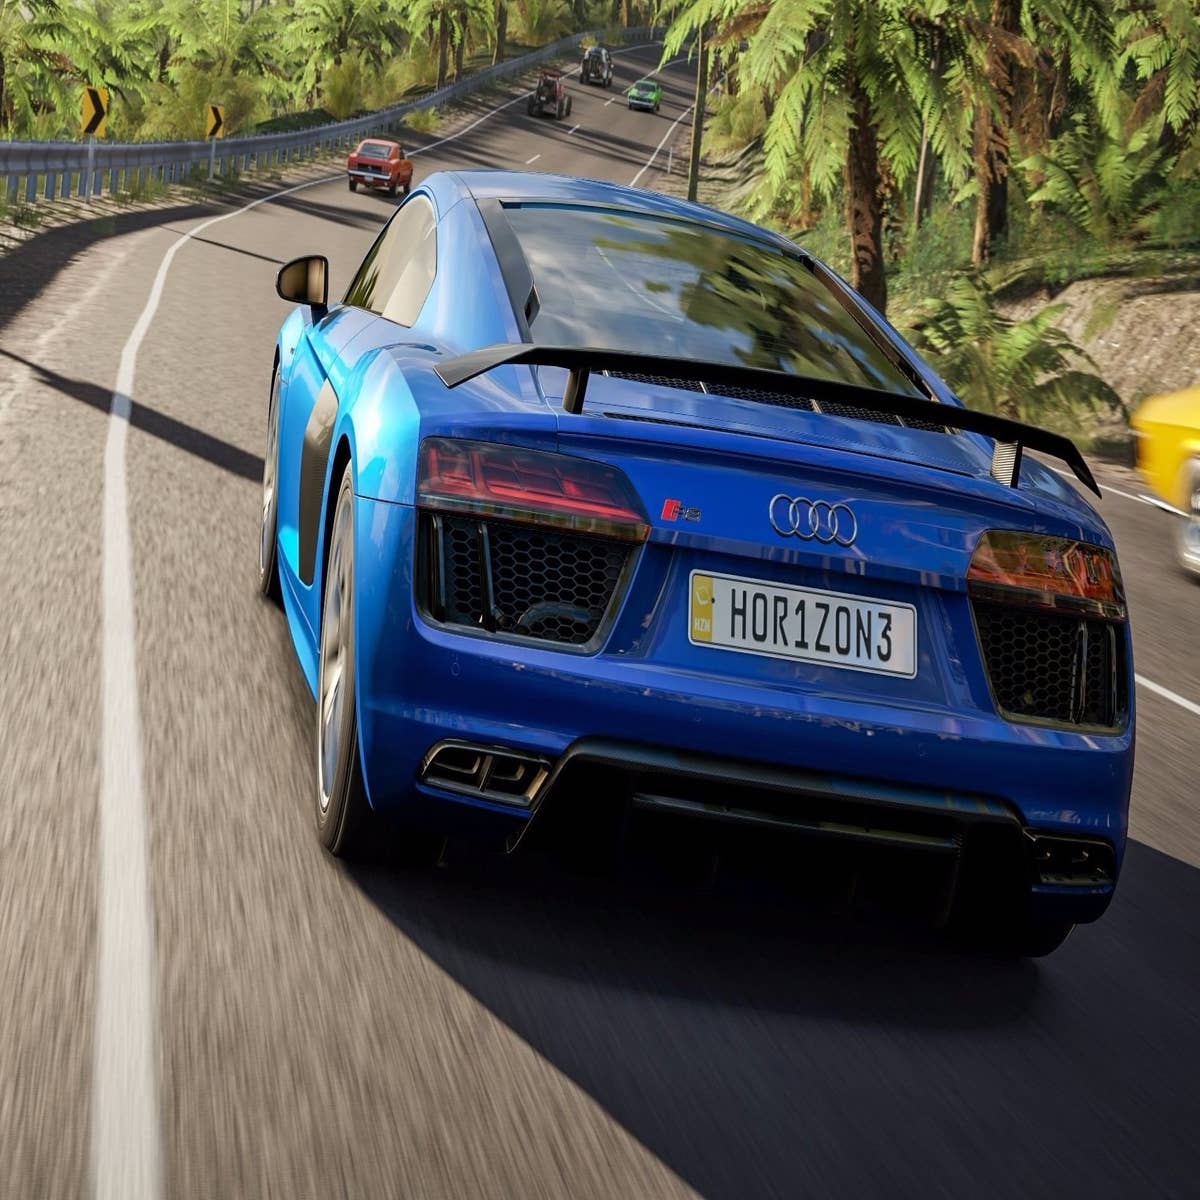 Forza Horizon 3 - Sus requisitos recomendados pisan fuerte